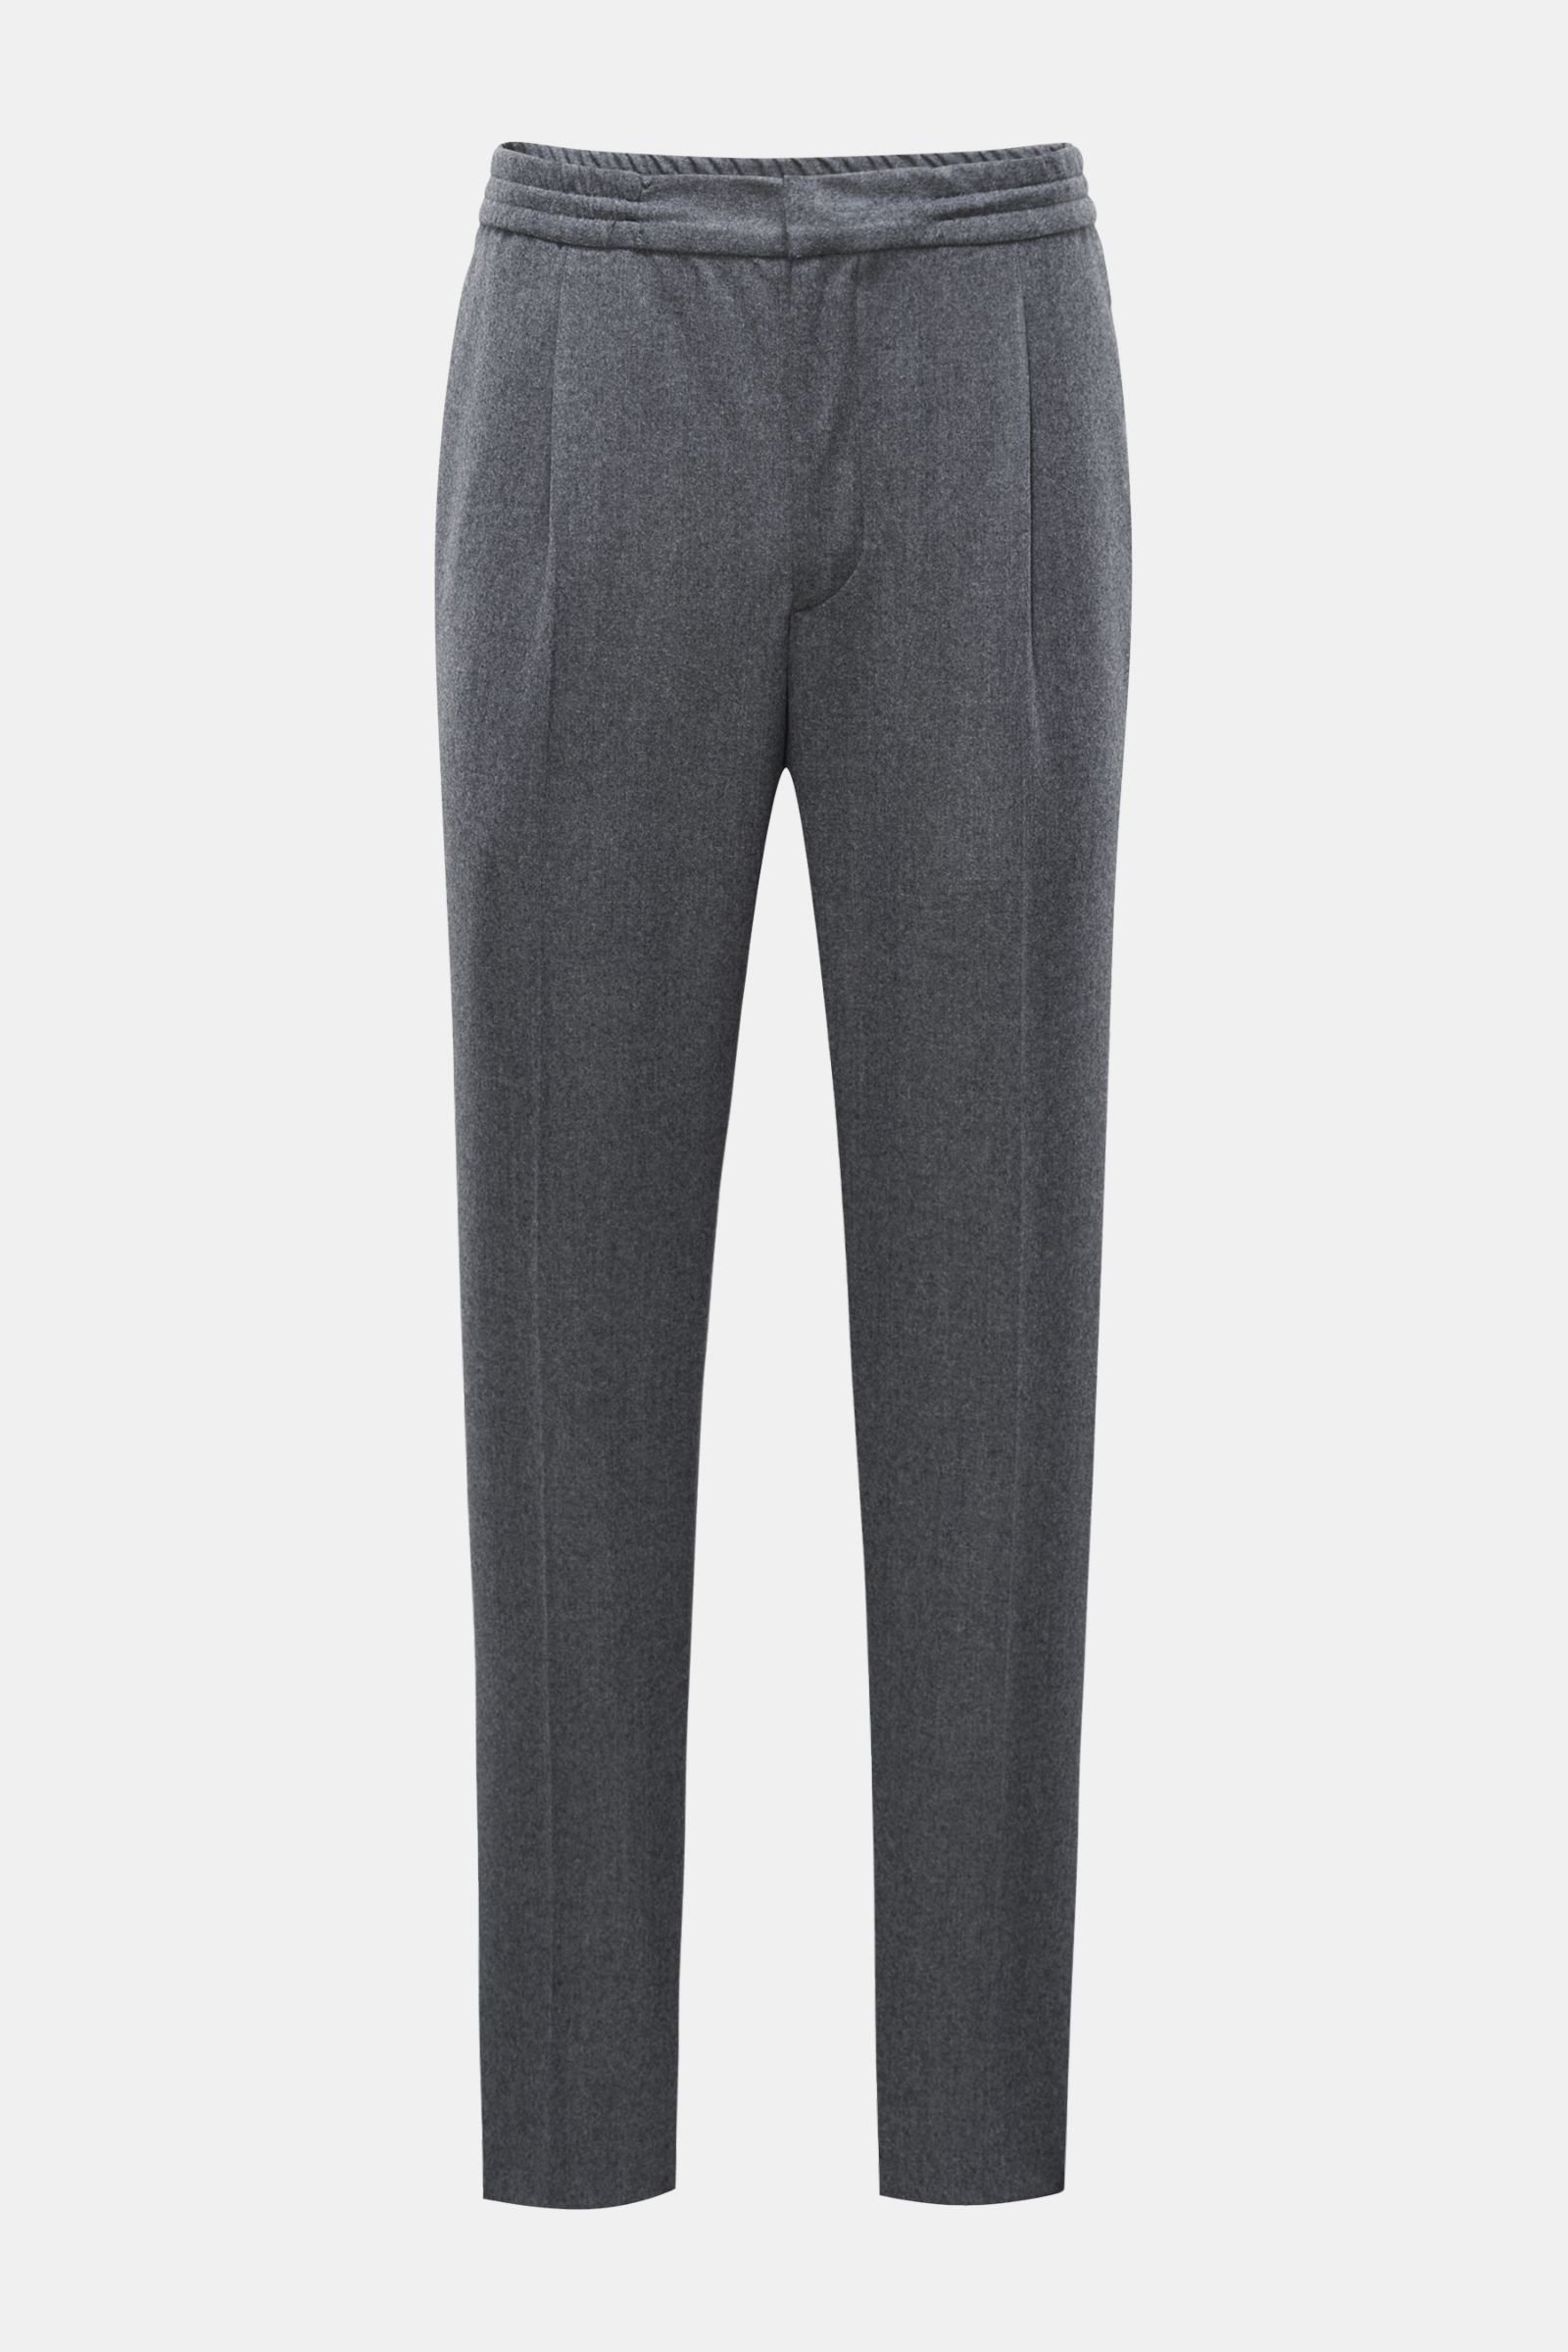 Wool jogger pants 'Drew' dark grey